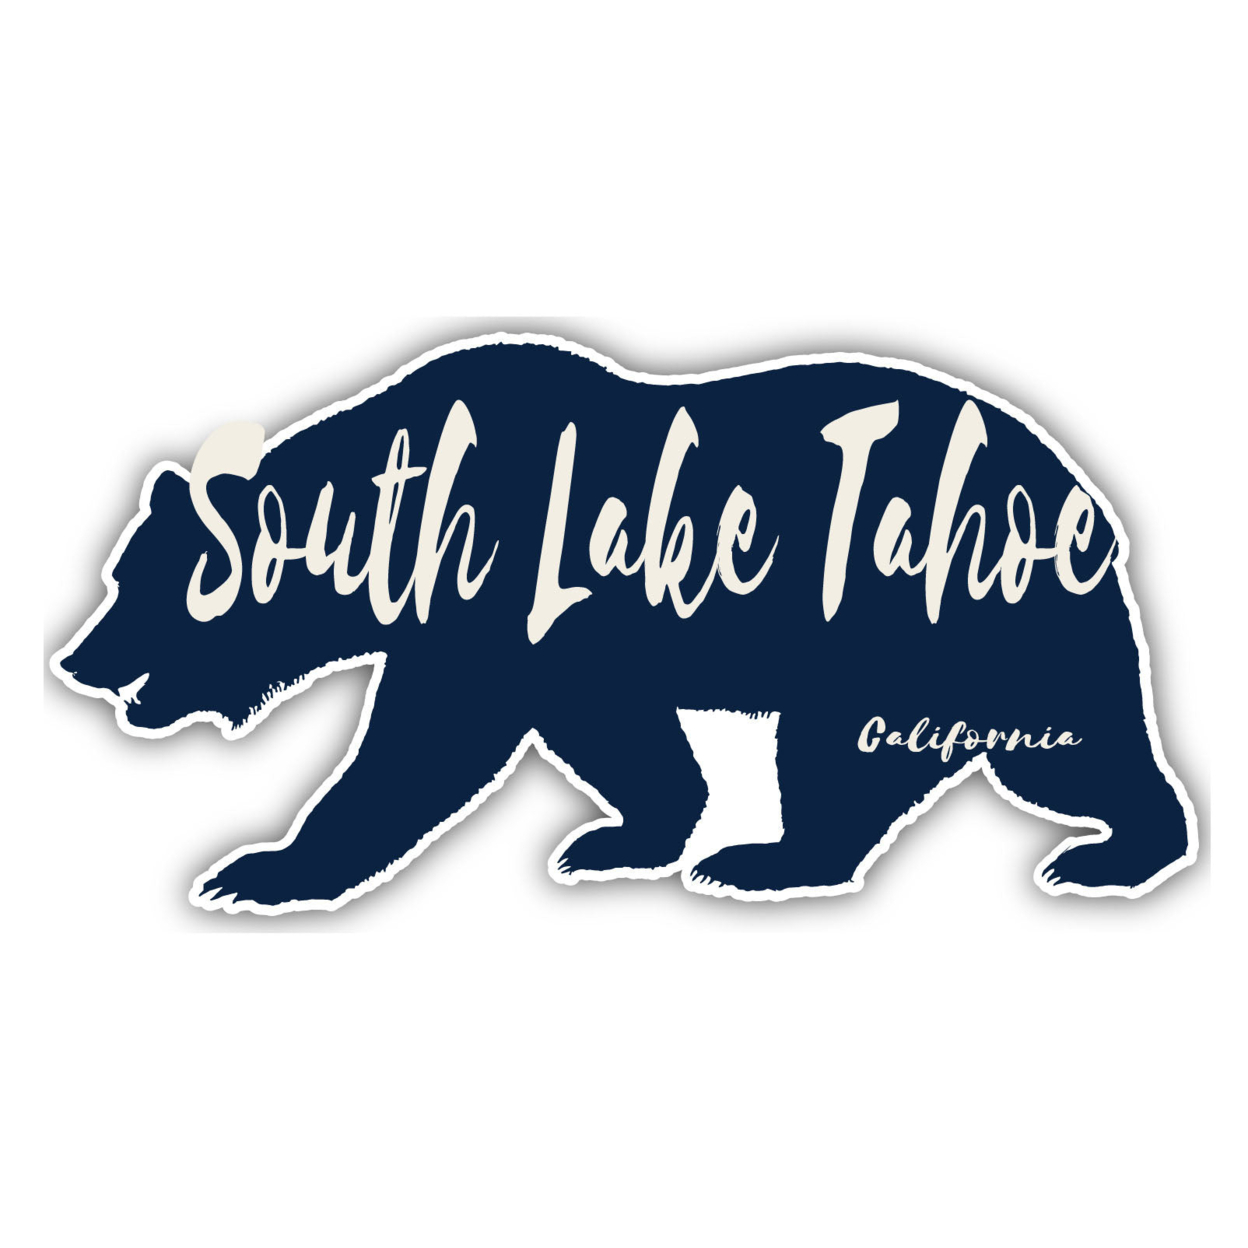 South Lake Tahoe California Souvenir Decorative Stickers (Choose Theme And Size) - Single Unit, 2-Inch, Bear